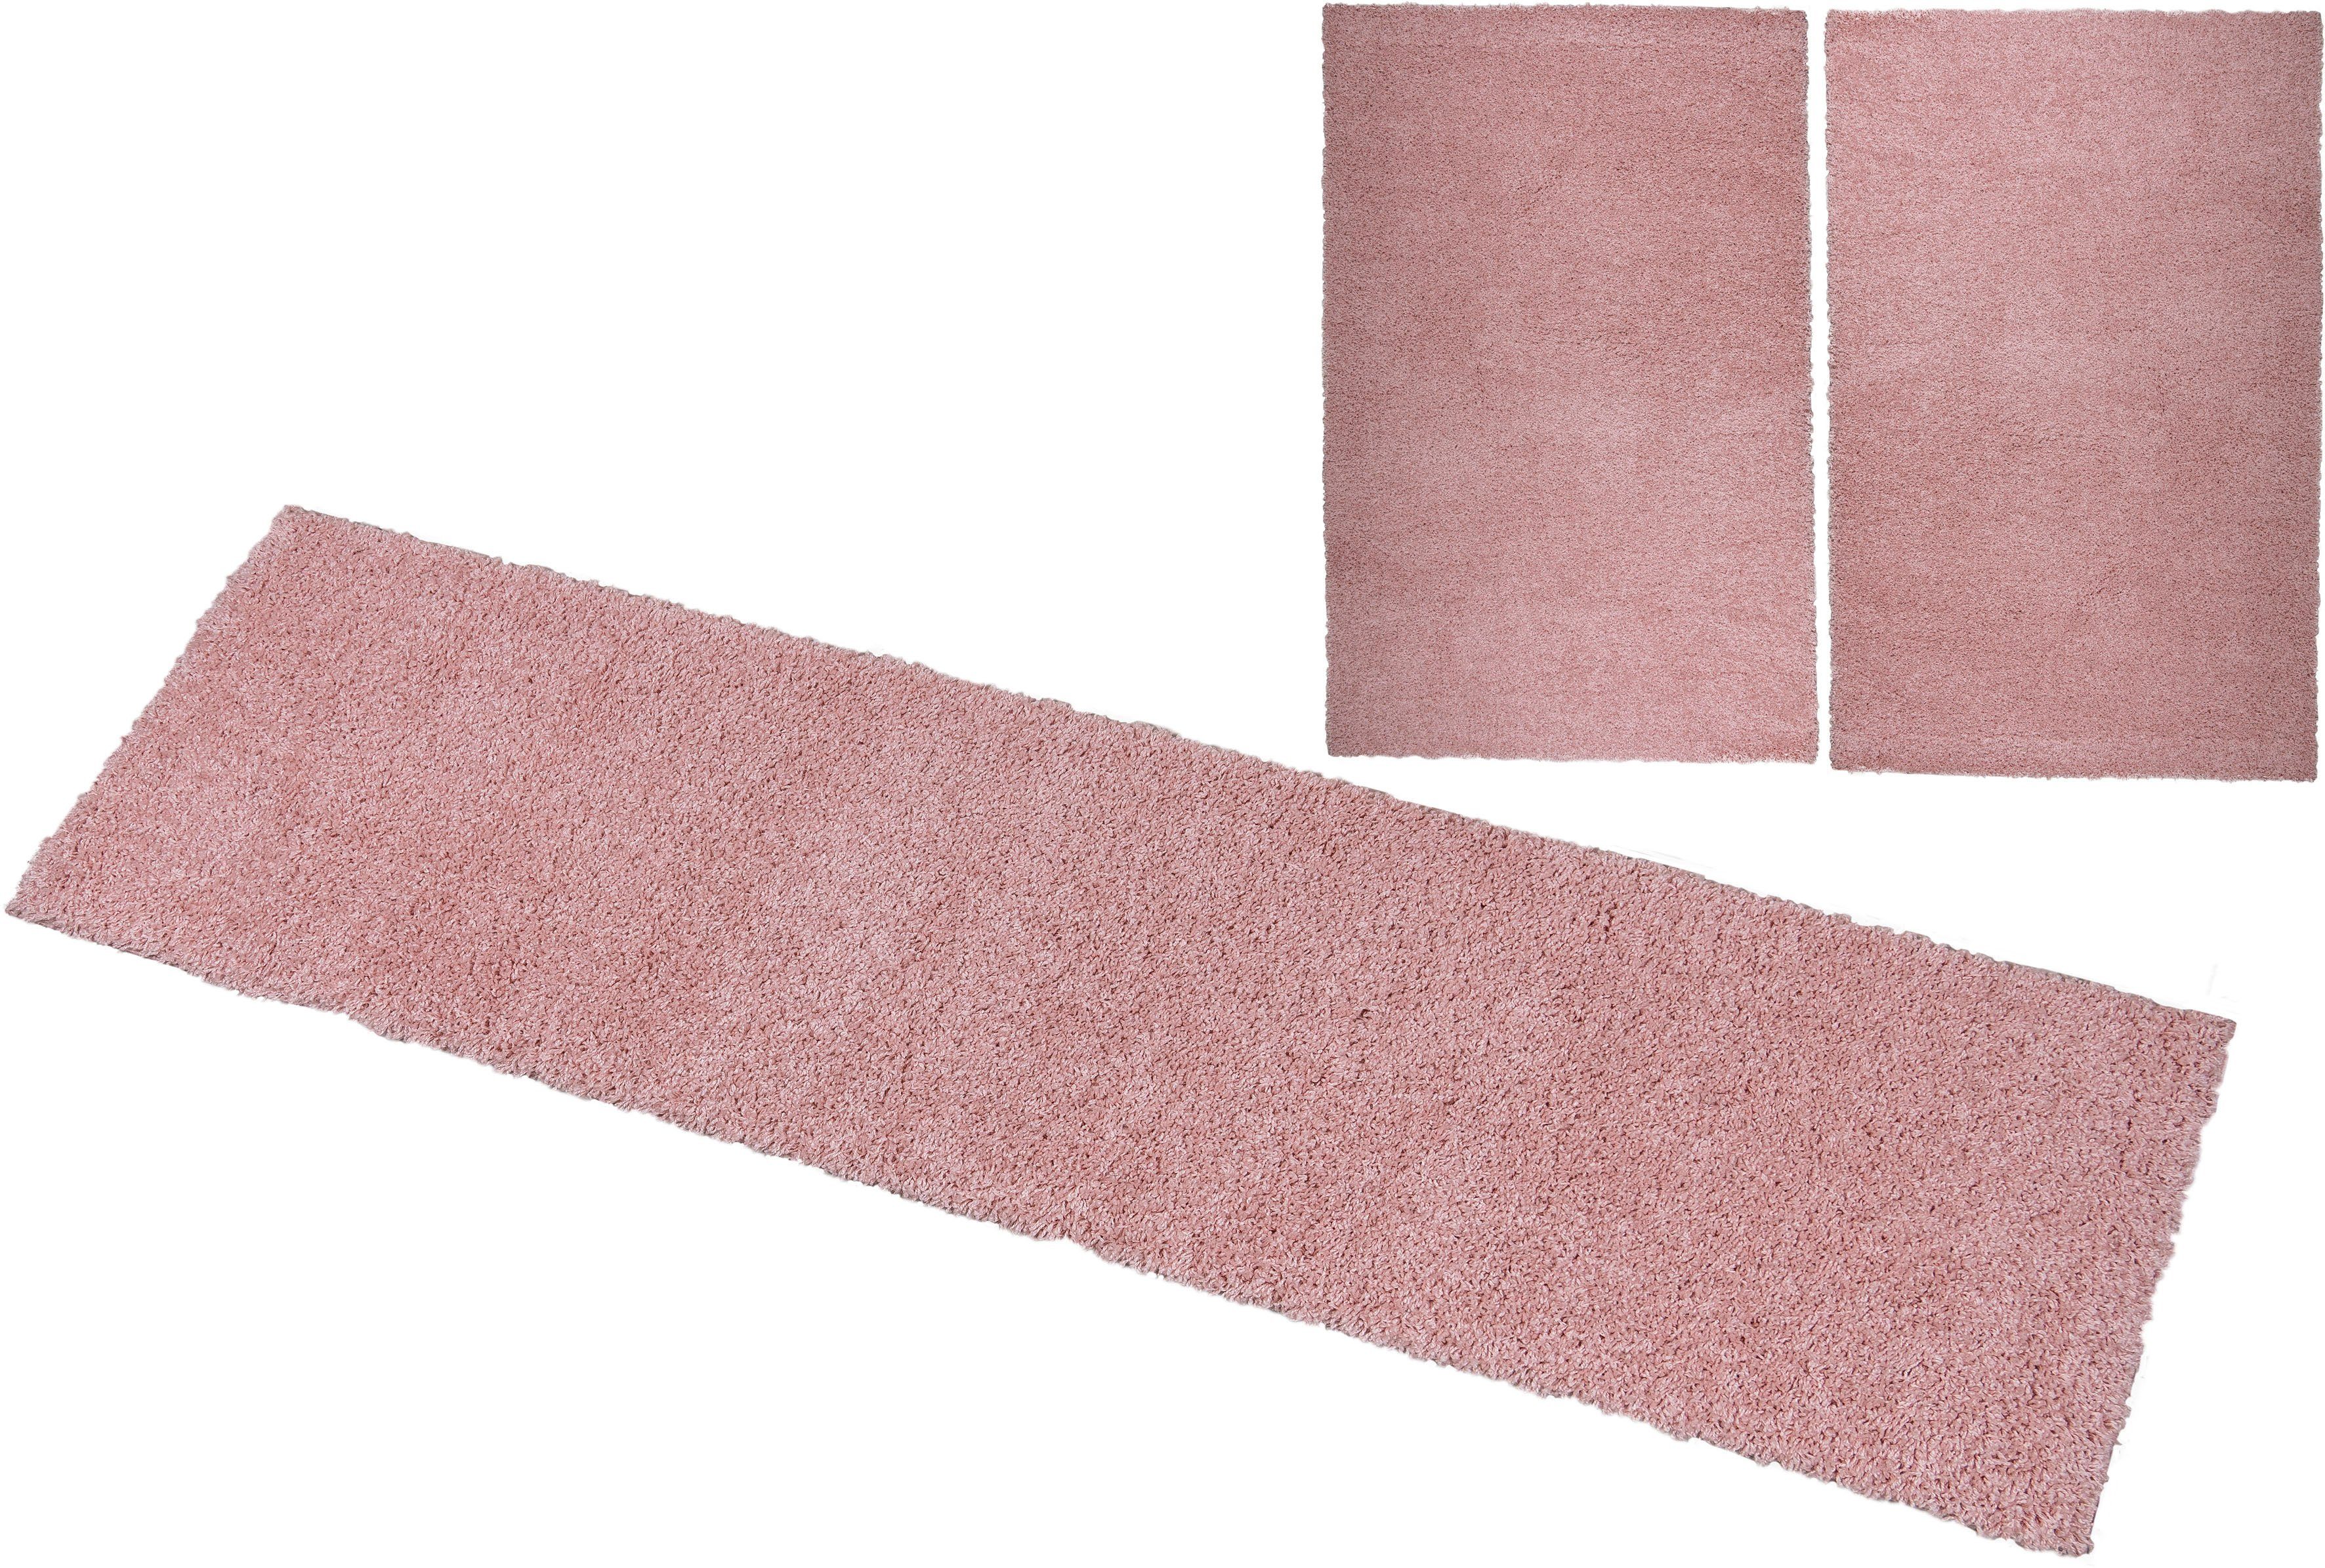 Bettumrandung Shaggy 30 Home affaire, Höhe 30 mm, (3-tlg), gewebt, 2- oder 3-teilig, Bettvorleger, Läufer-Set, Uni-Farben rosa